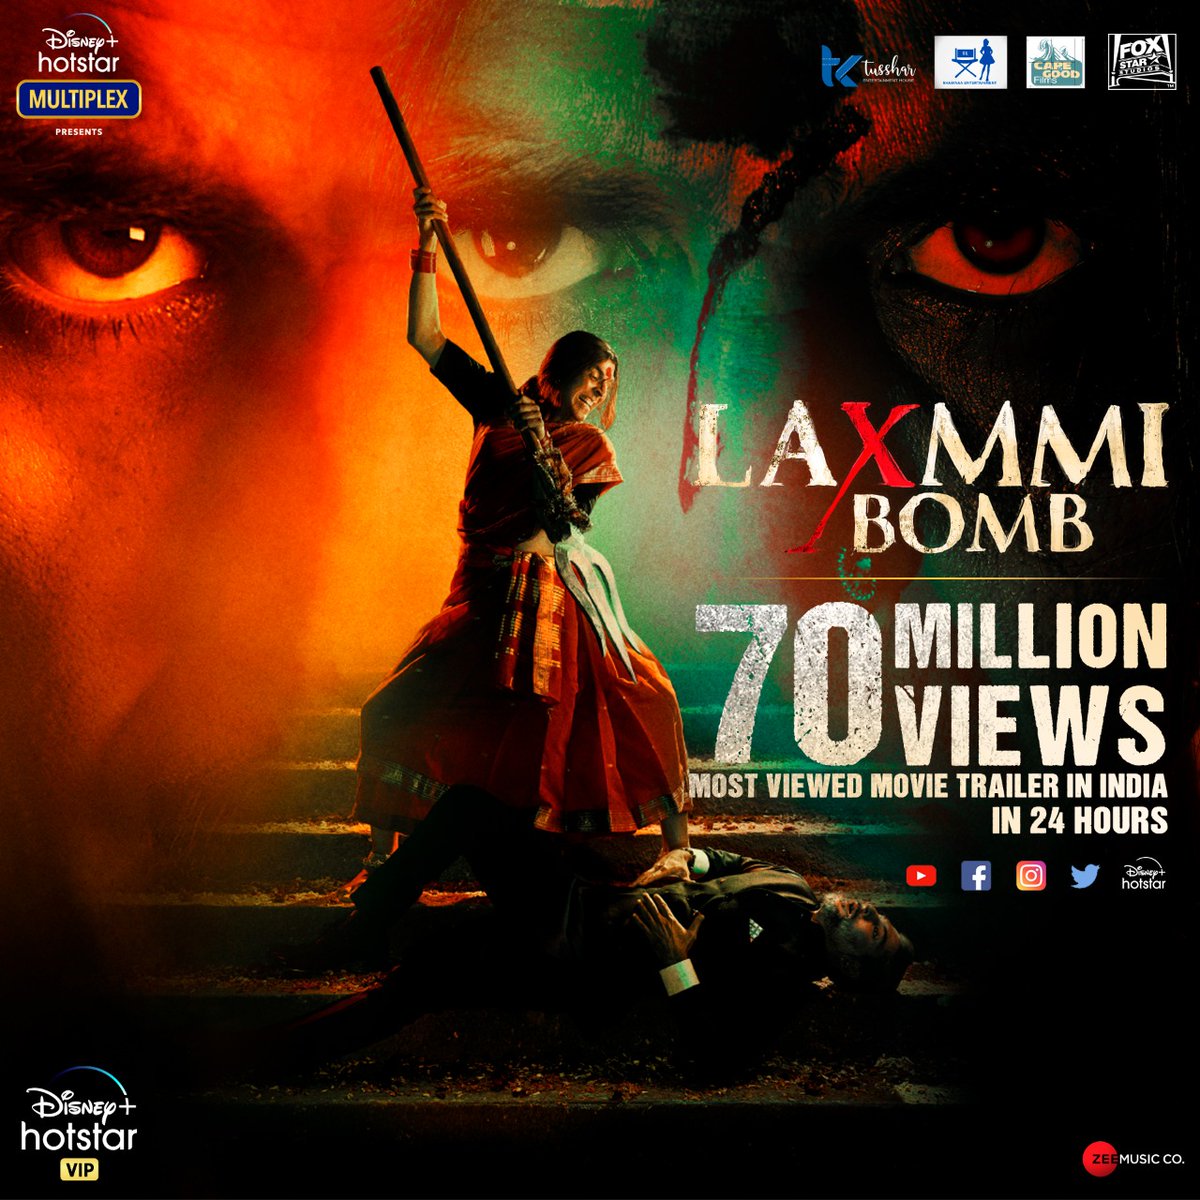 Bollywood No. 1 superstar #AkshayKumar's 
#LaxmmiBombTrailer most viewed trailer in India in 24 Hours
#YehDiwaliLaxmmiBombWali 
#FoxStarStudios #DisneyPlusHotstarMultiplex 
#LaxmmiBomb @TusshKapoor